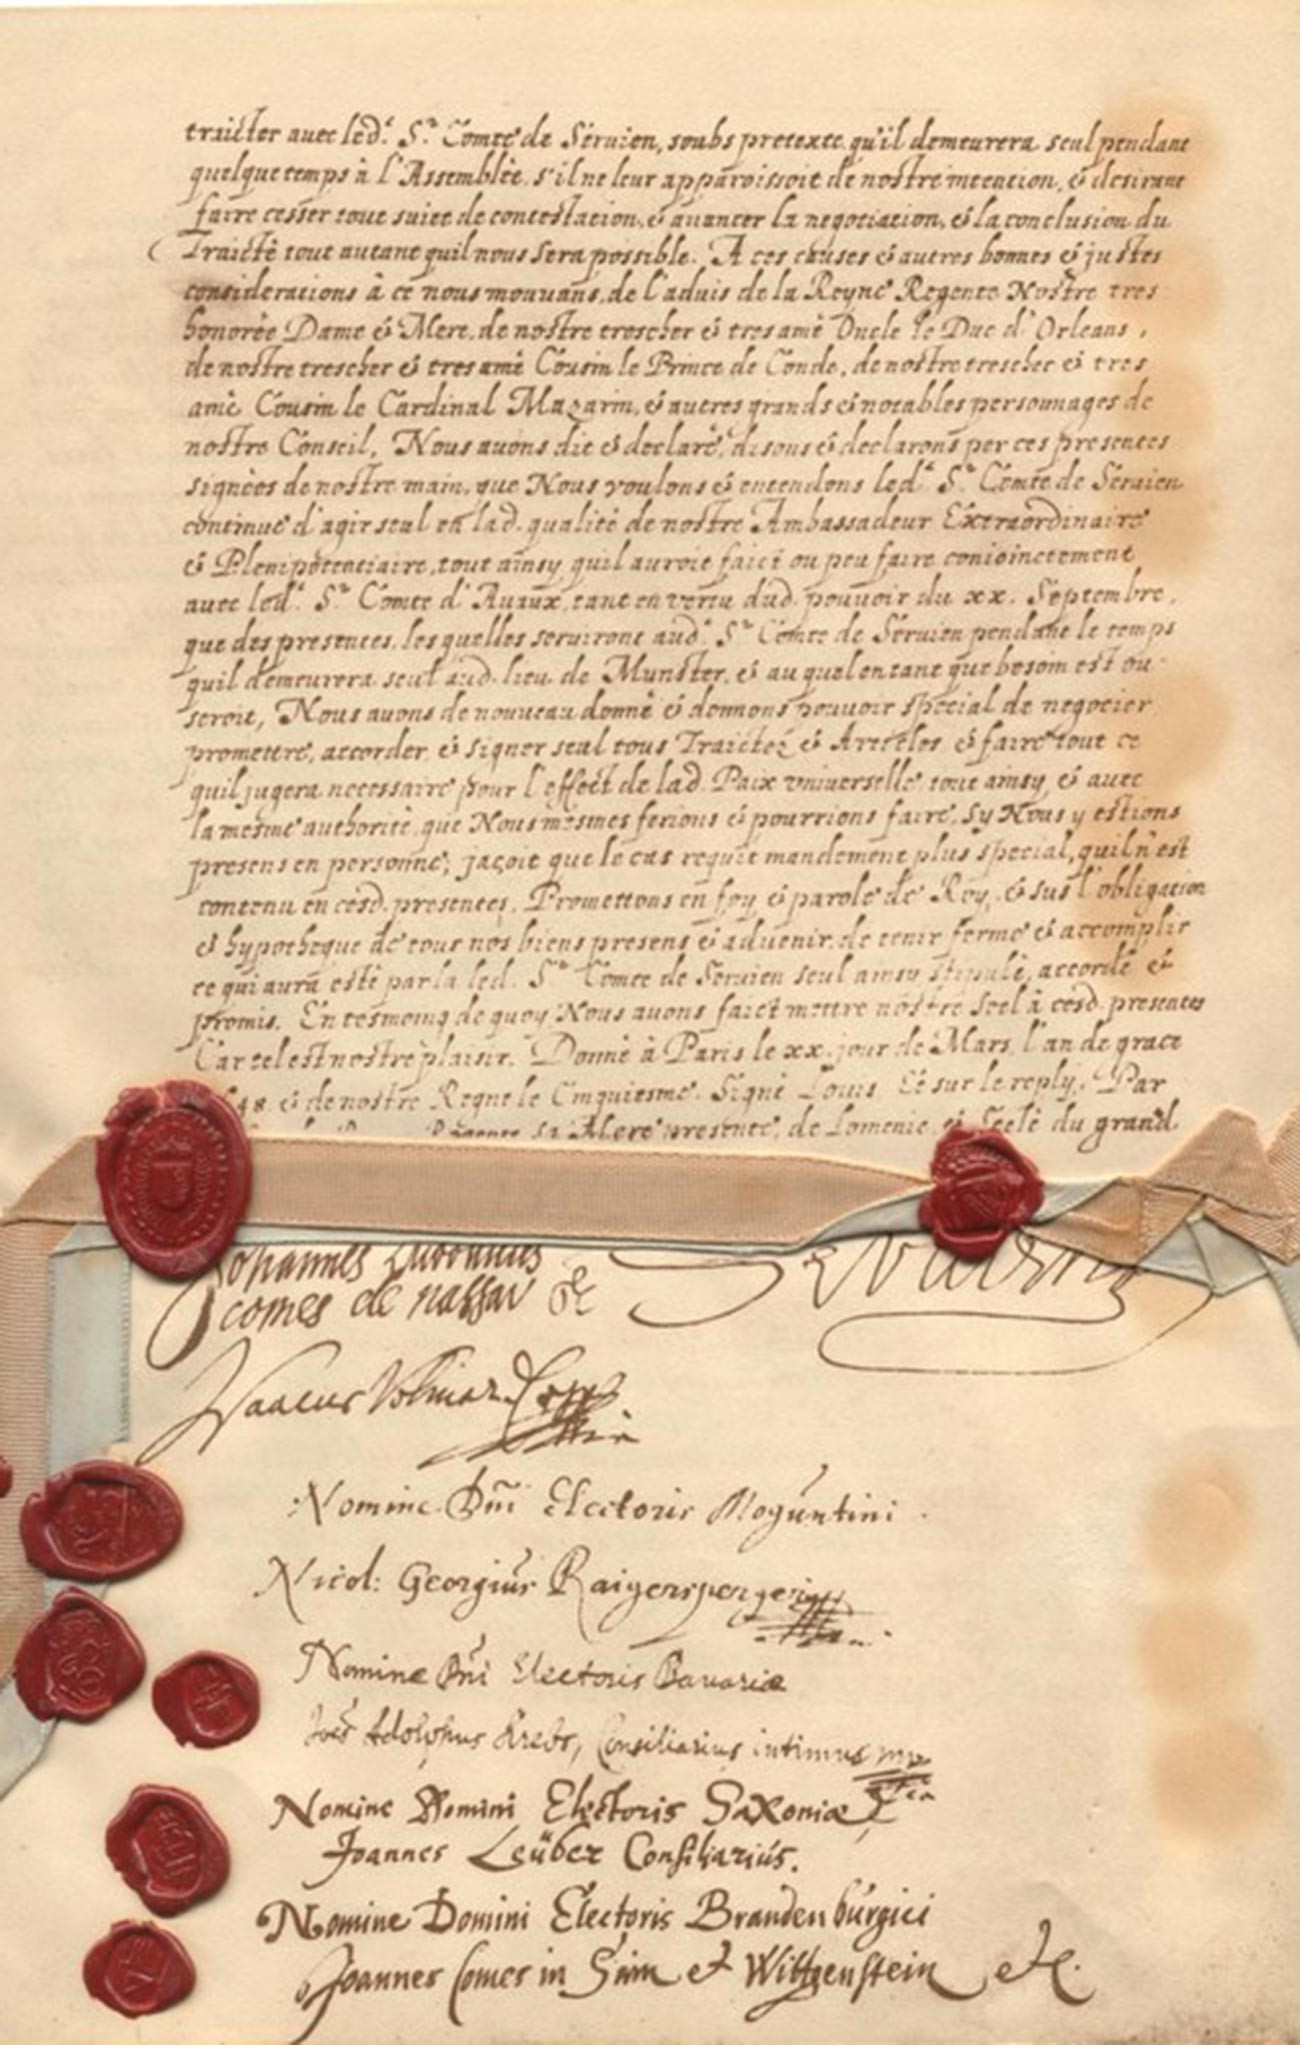 Страница од Вестфалскиот договор на француски јазик.